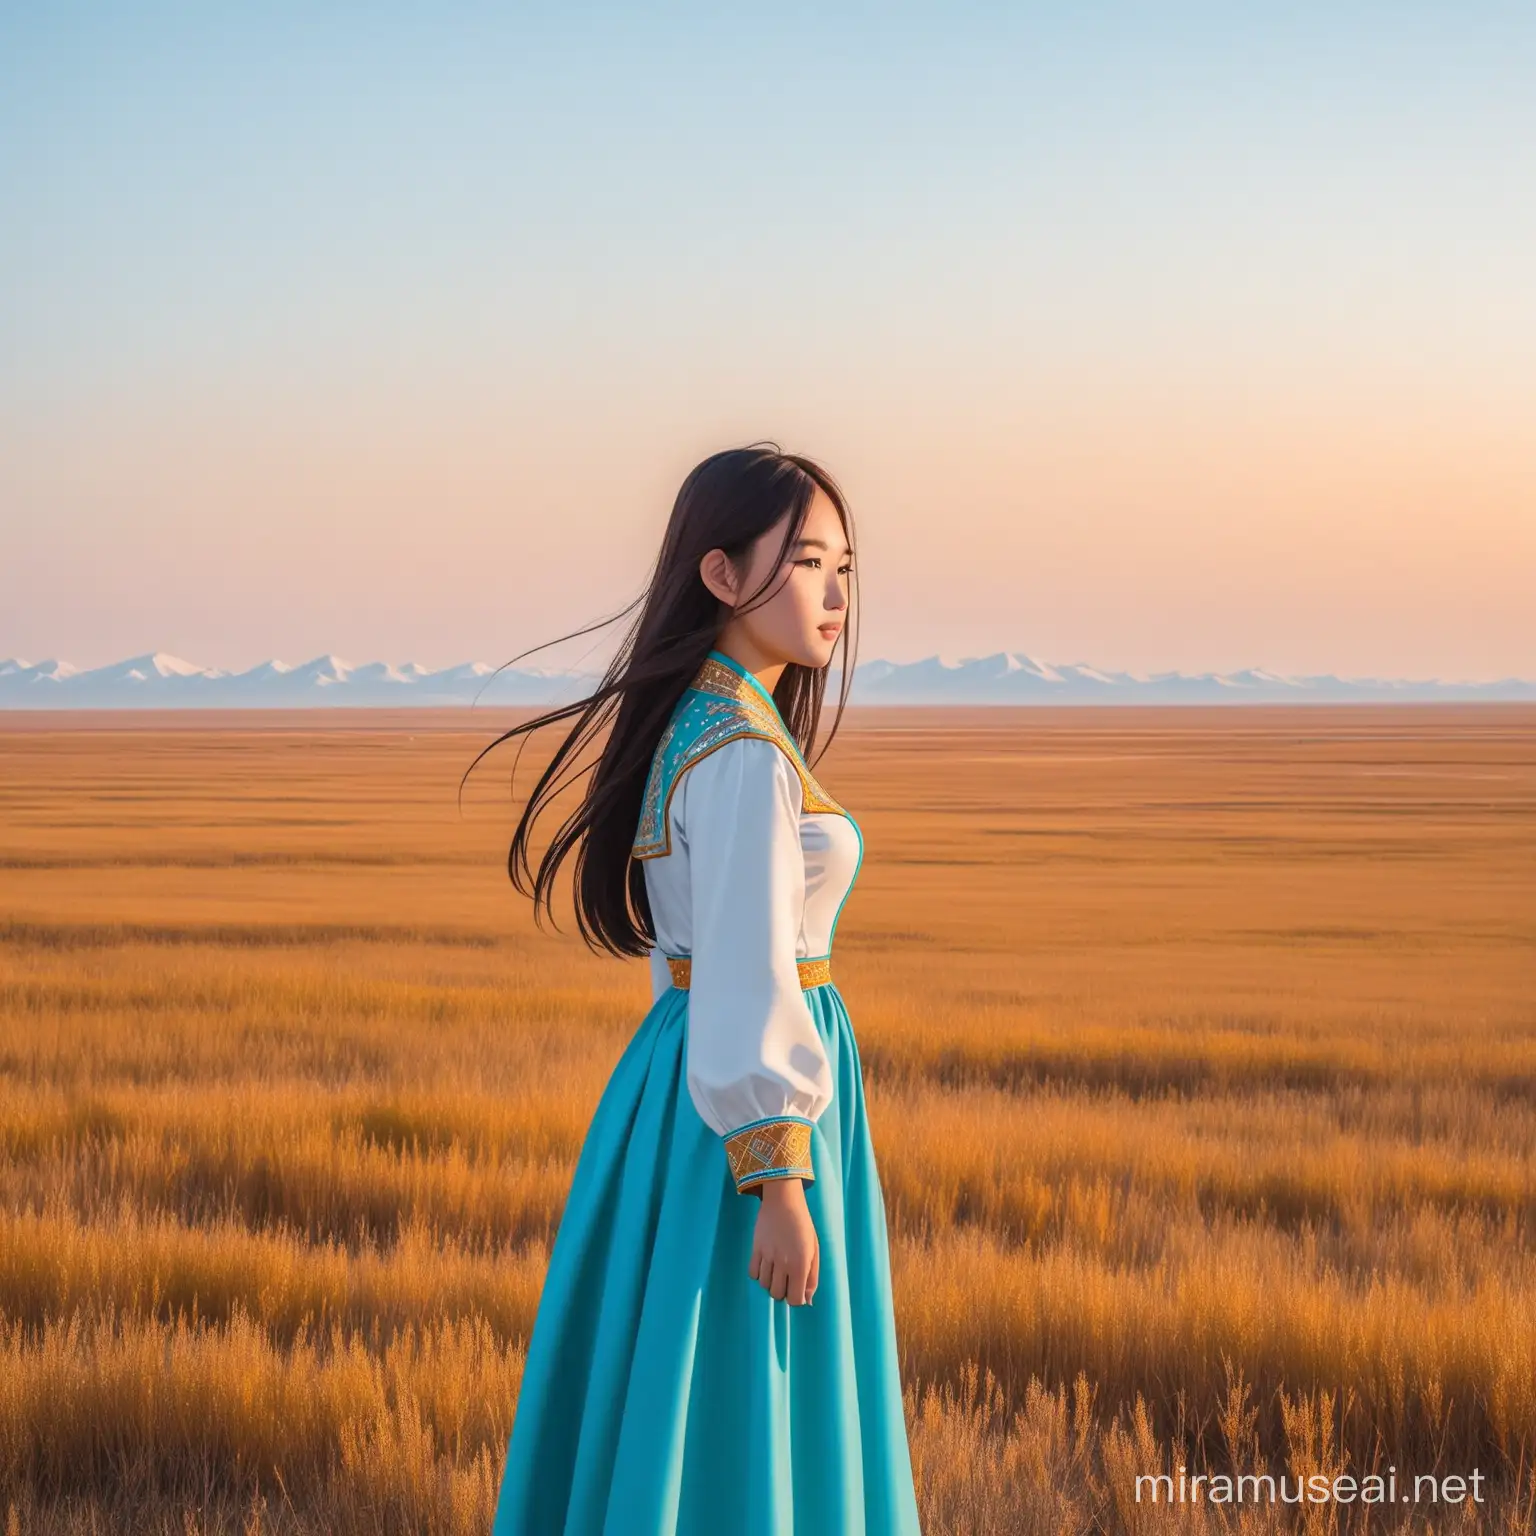 Kazakh Girl Walking Alone in Vast Landscape